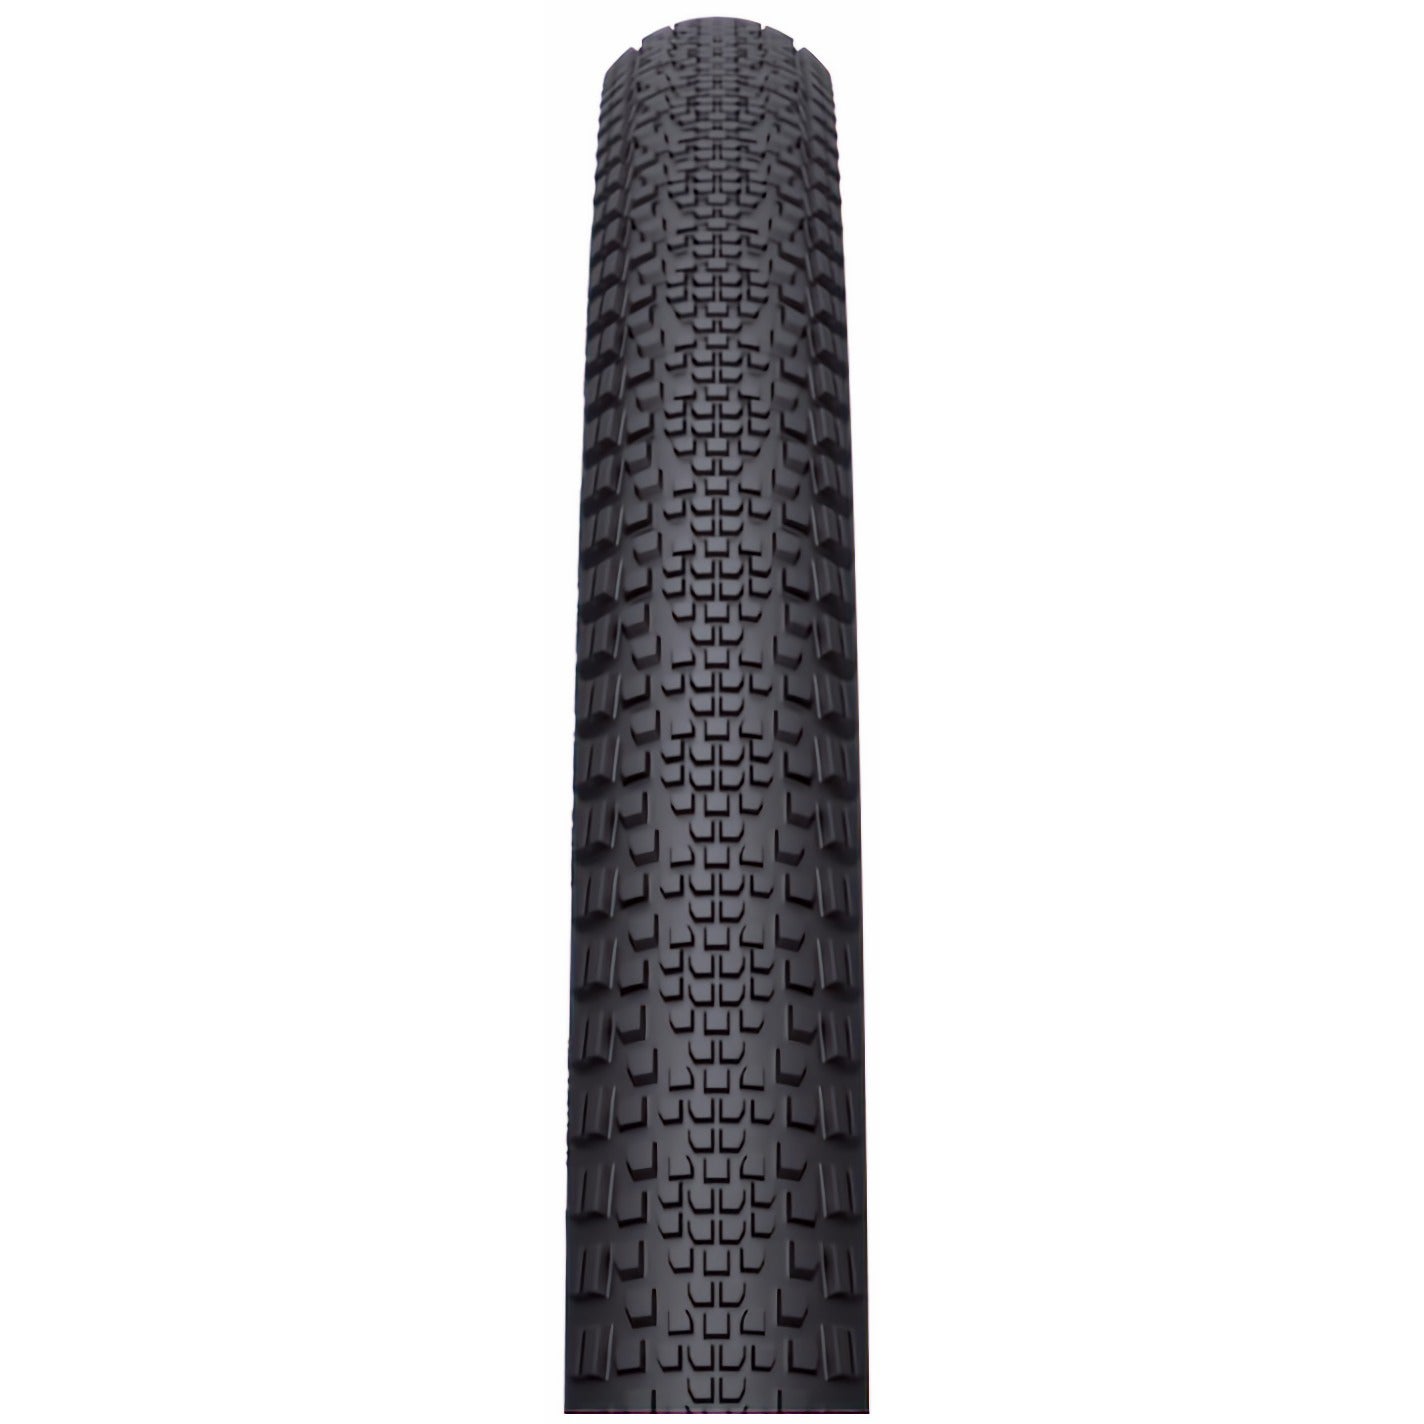 WTB Riddler Gravel Tyre - Black - TCS Kevlar Folding - TCS Light - Dual DNA - 37c - 700c